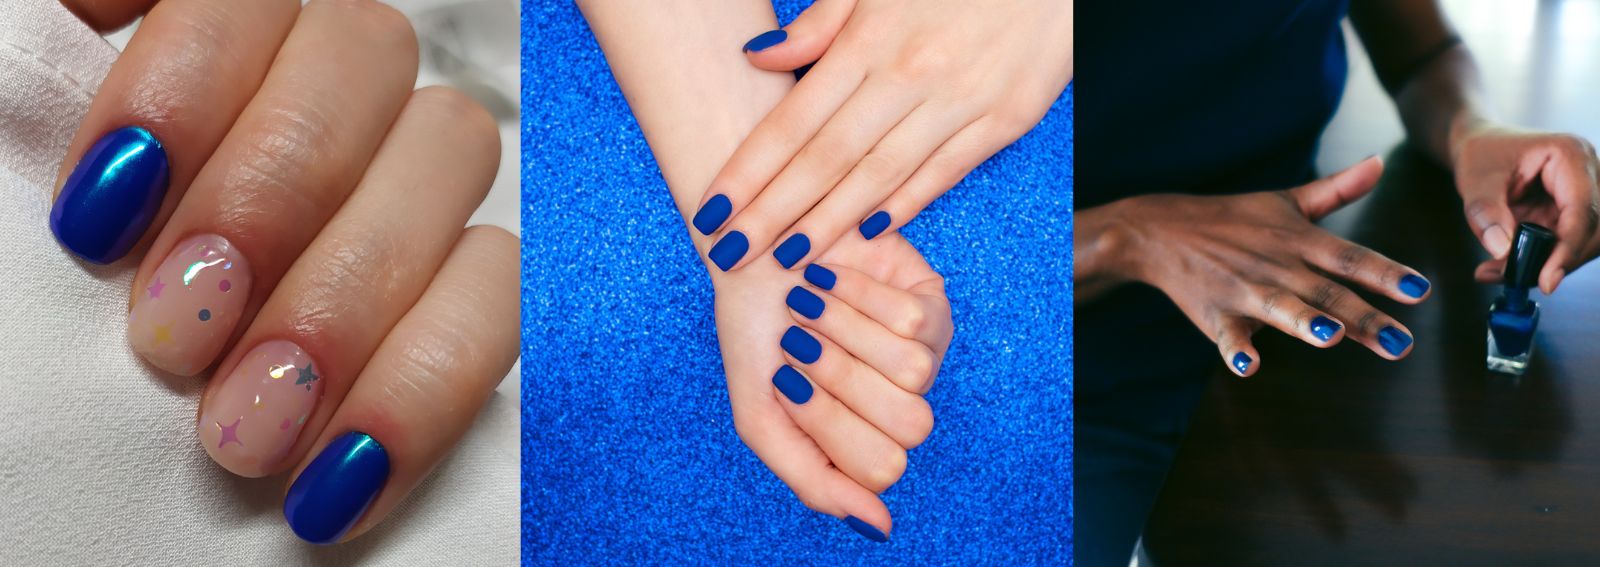 cover unghie blu elettrico